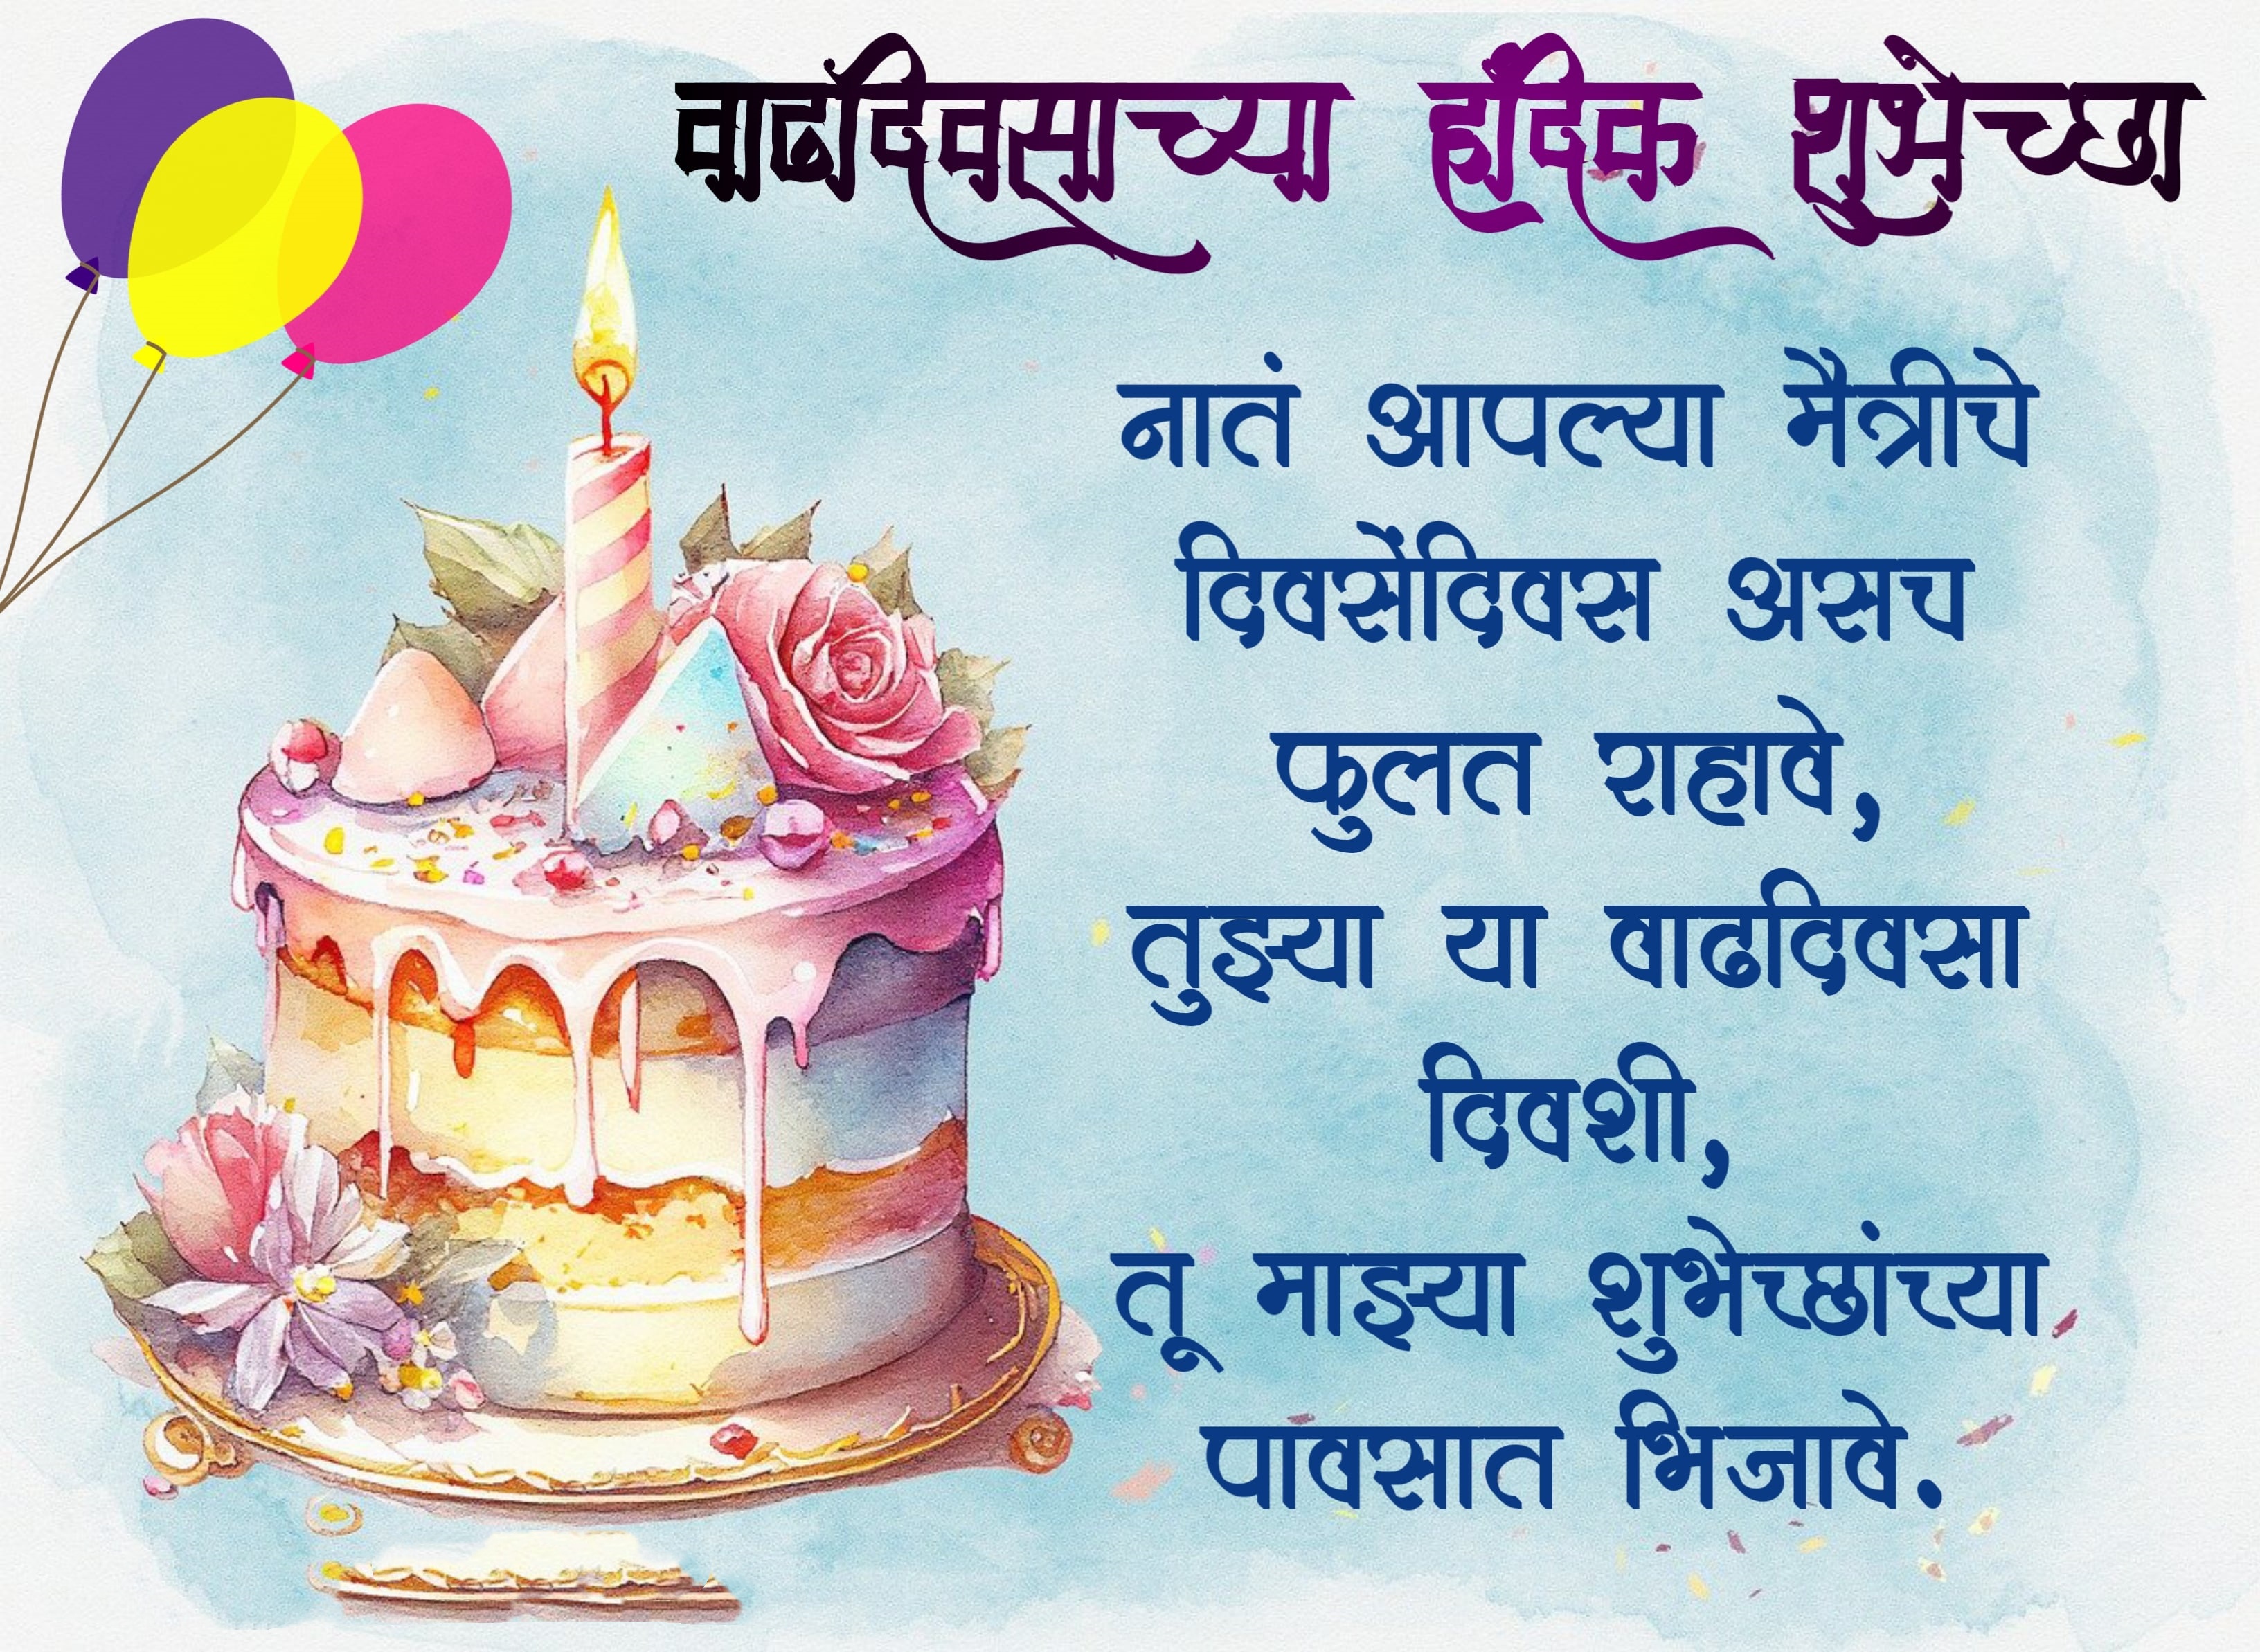 Best Happy birthday wishes in Marathi